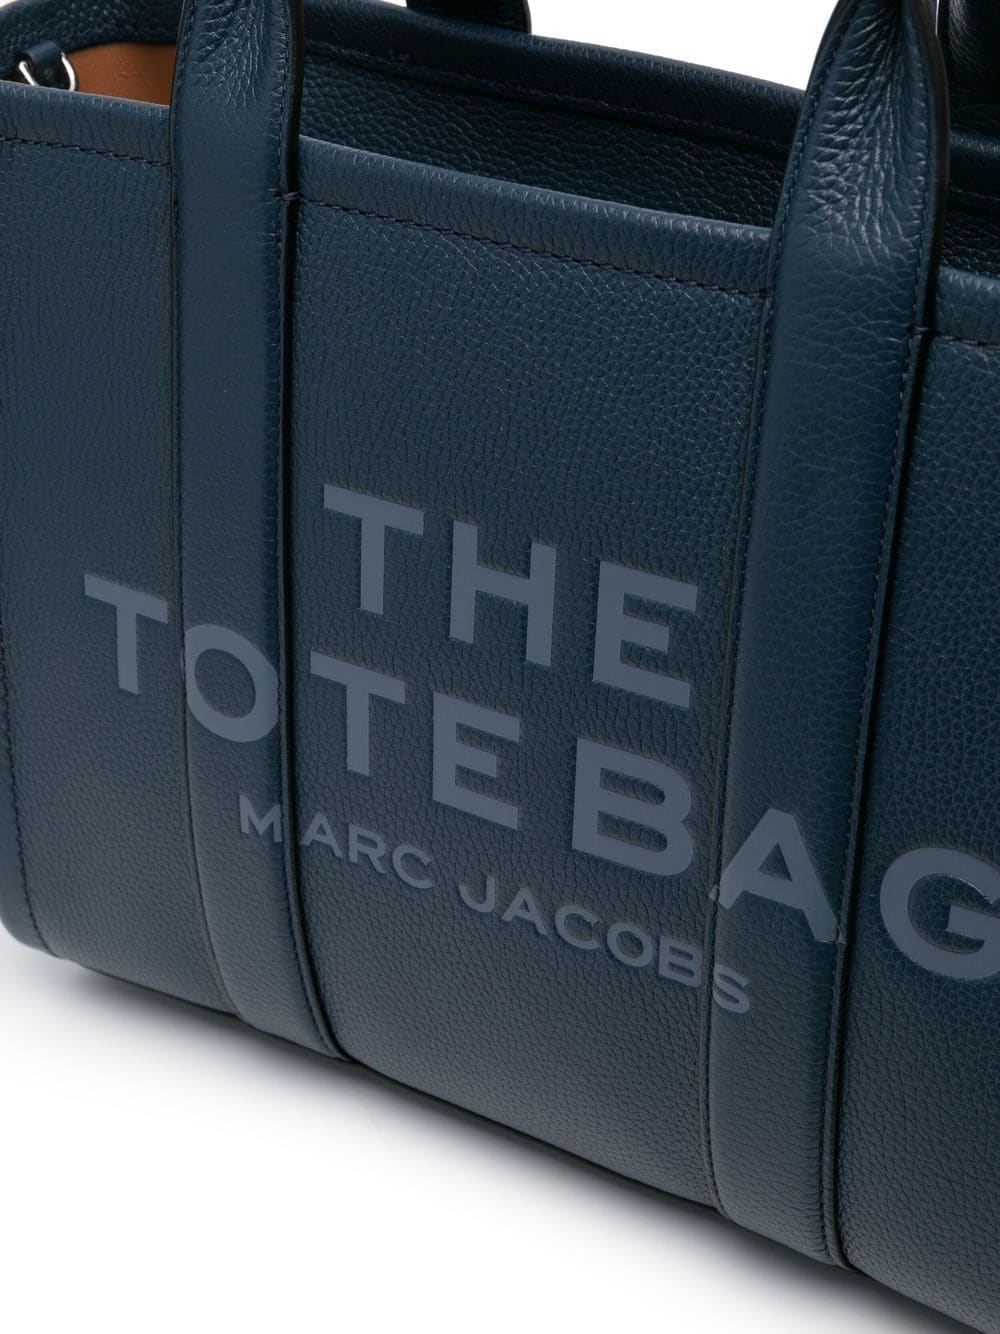 Marc Jacobs The Medium Tote Bag - Farfetch